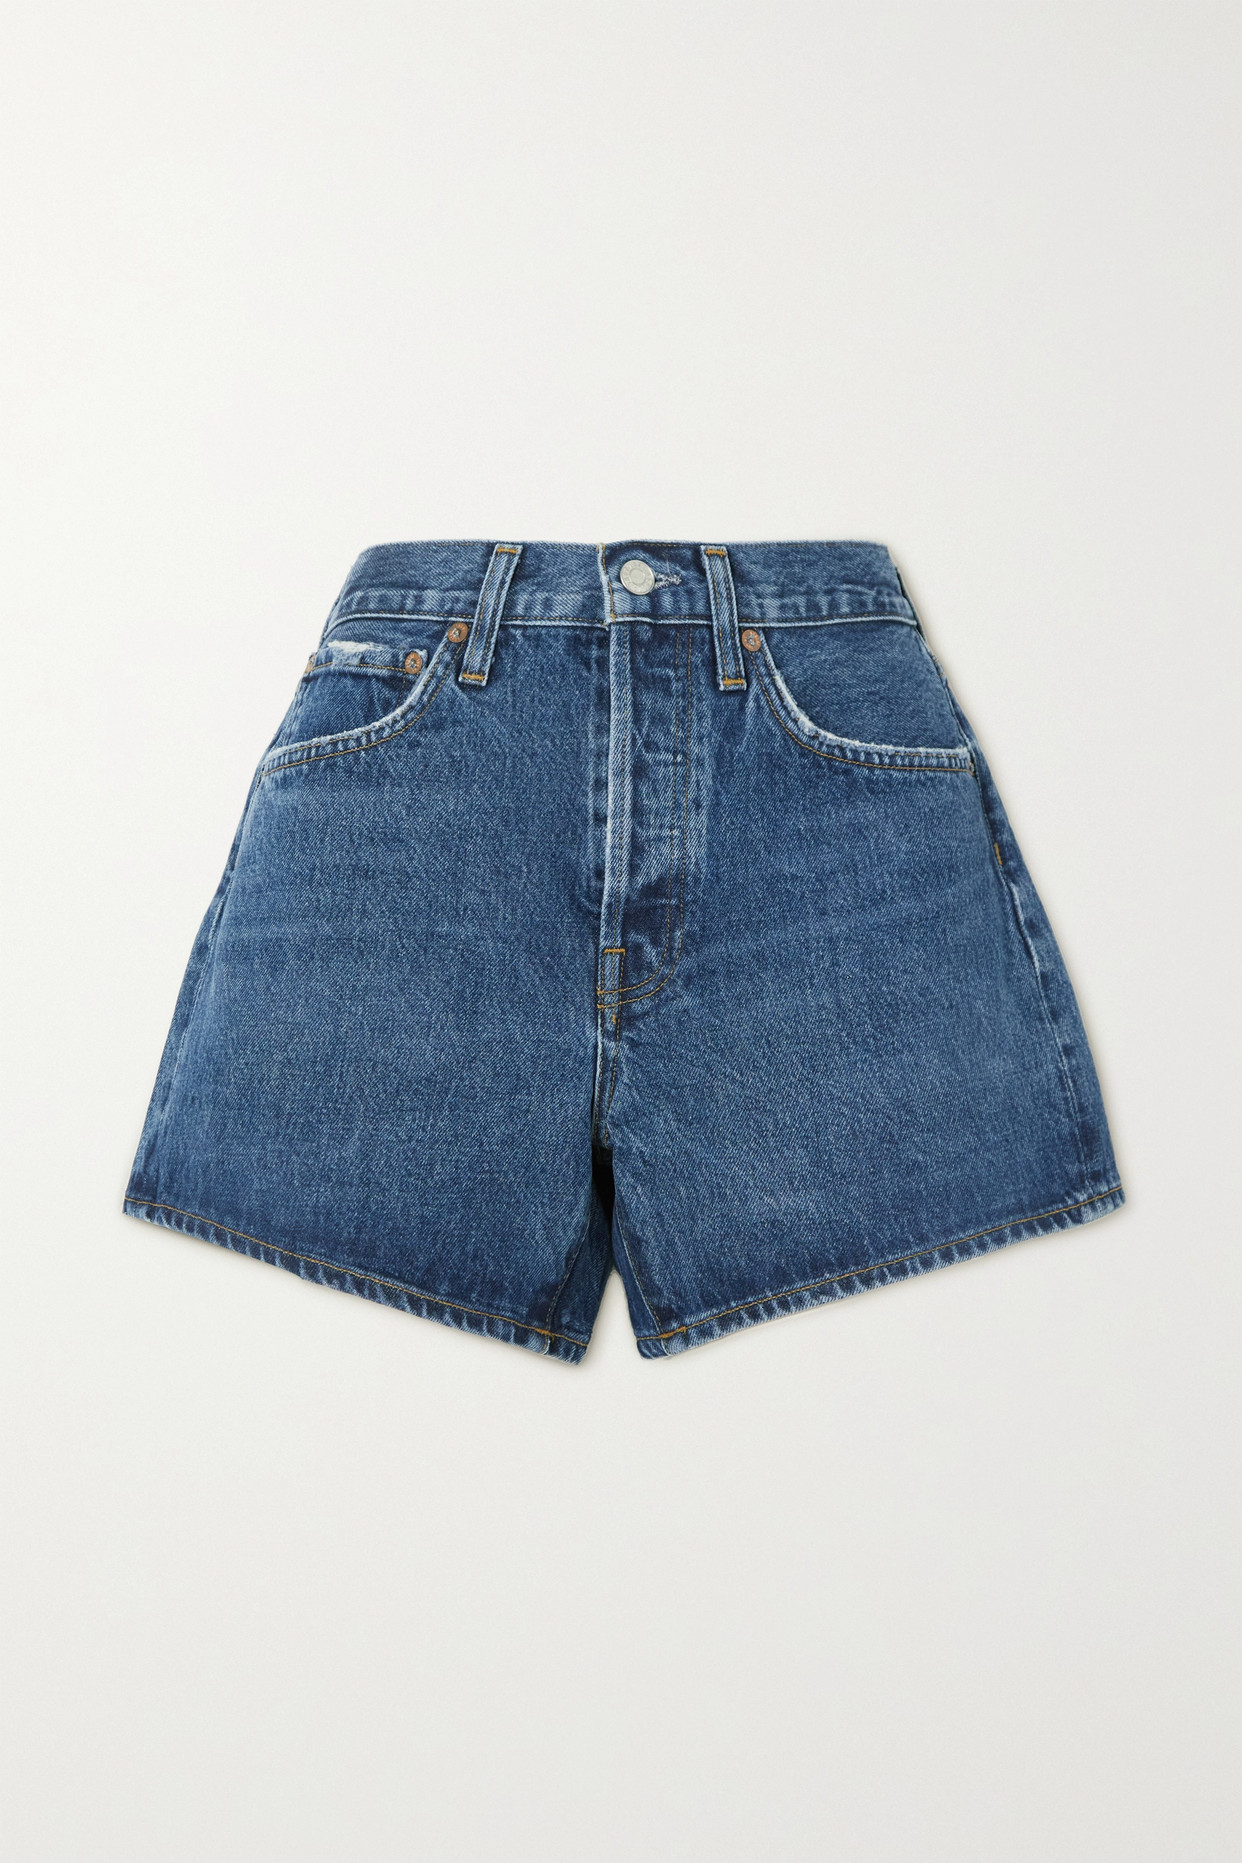 Parker Long Clean Organic Denim Shorts